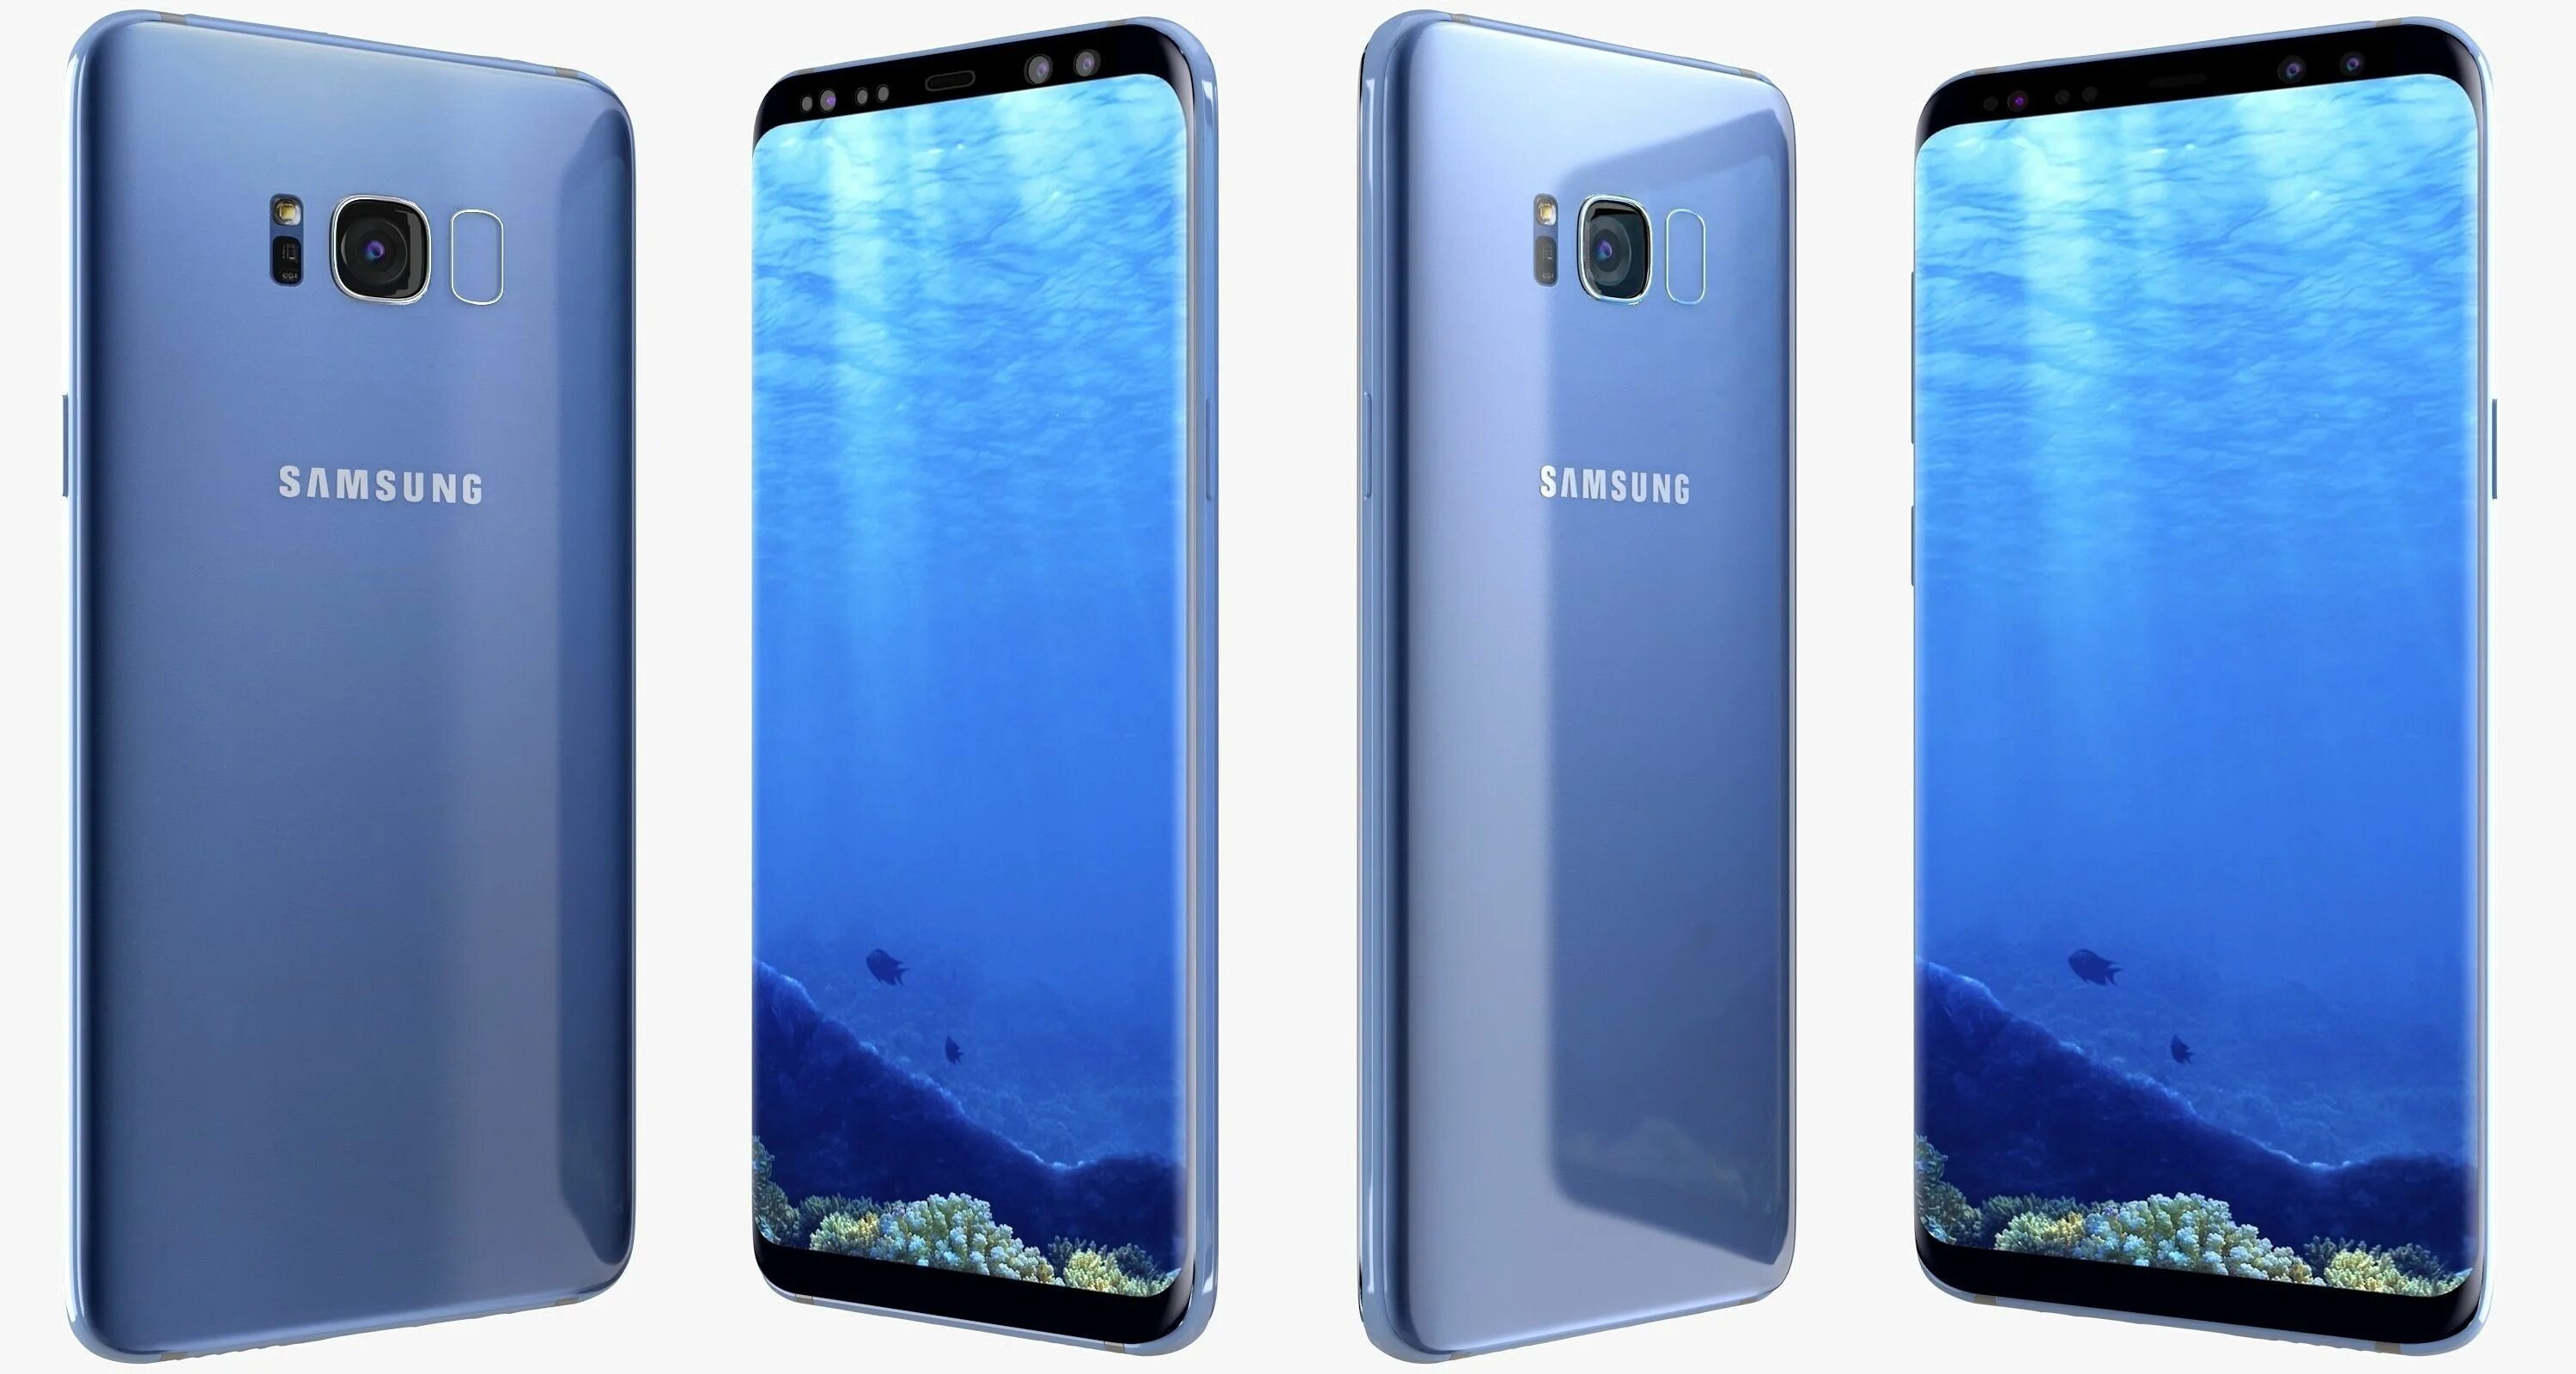 Coral blue. Samsung s8 Blue. Samsung Galaxy s8 Blue. Samsung Galaxy s8 Coral. Samsung Galaxy s8 синий.